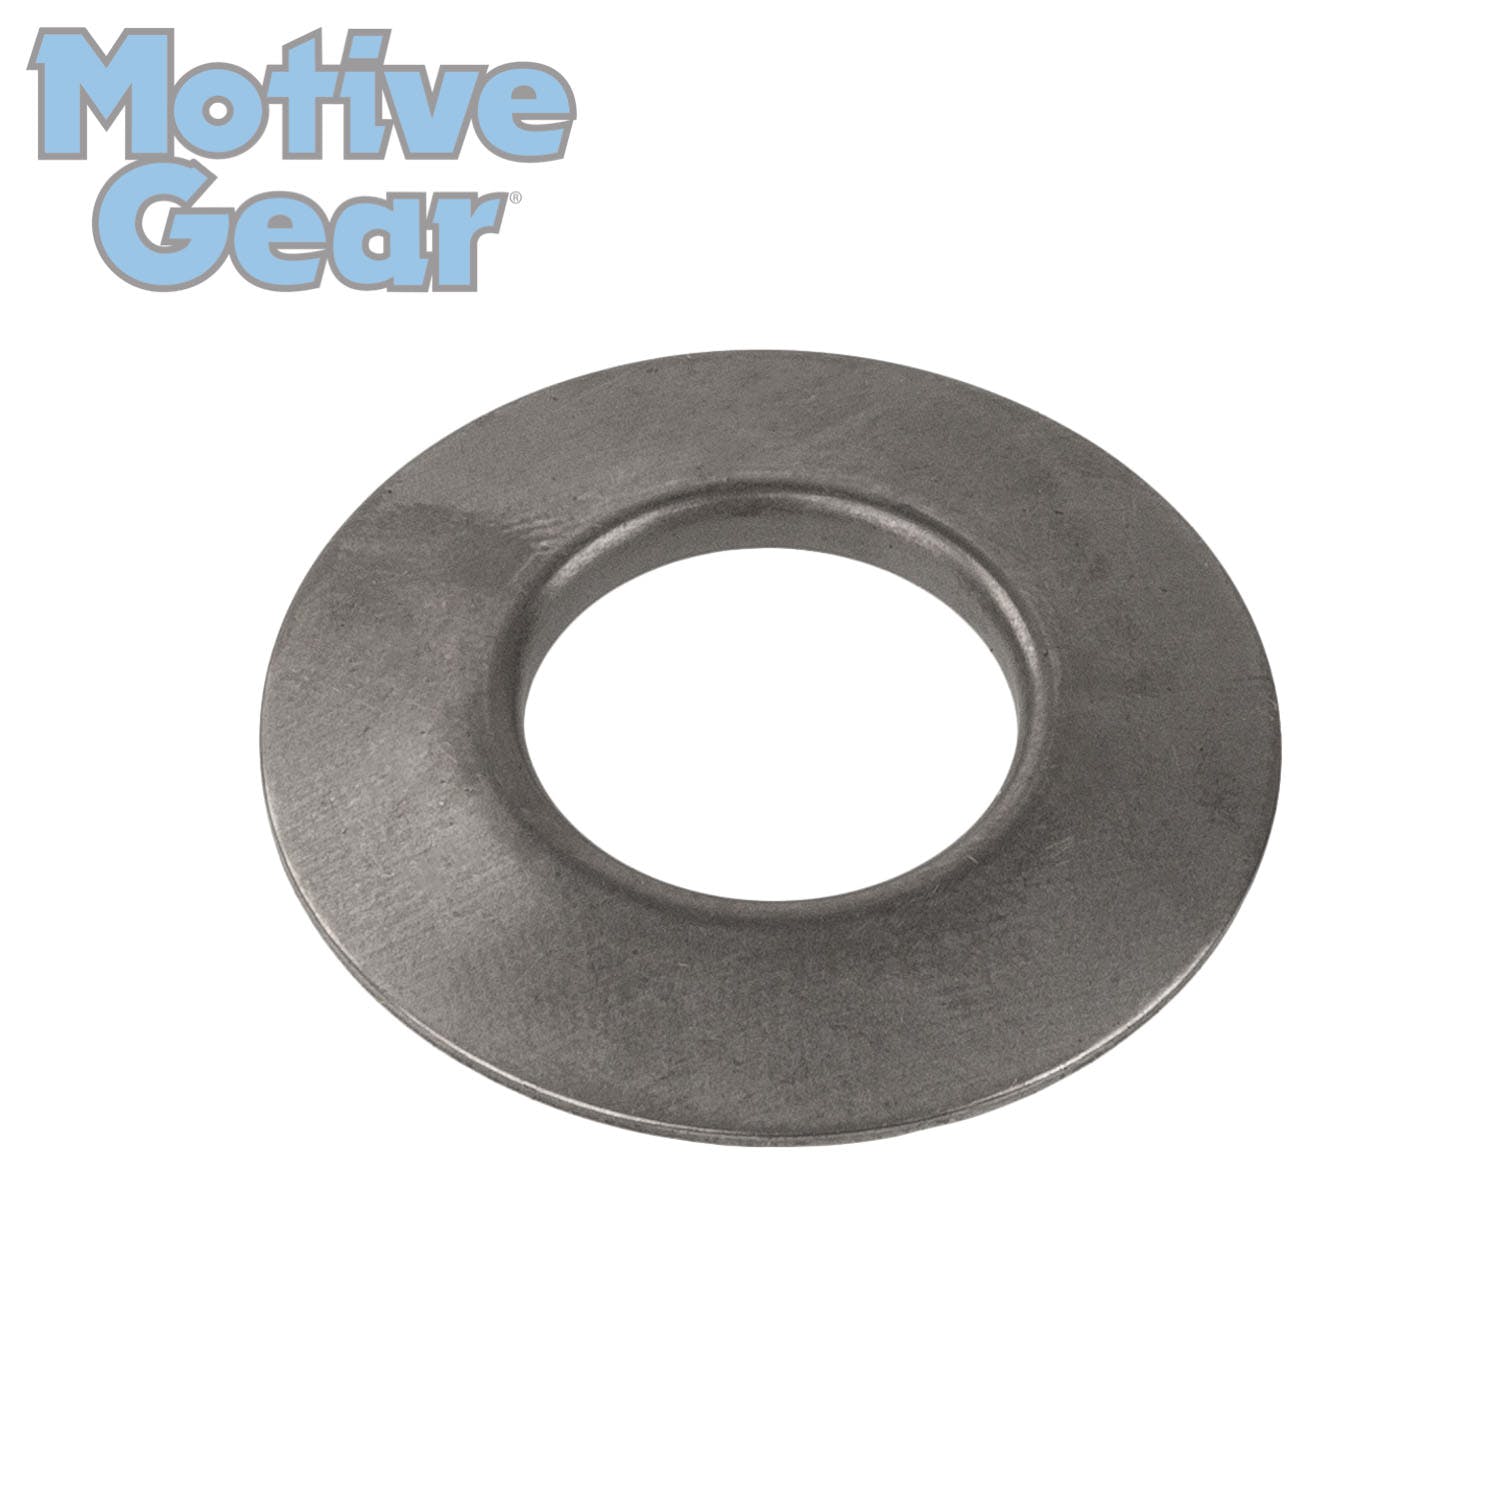 Motive Gear C7.25PW Differential Pinion Gear Thrust Washer